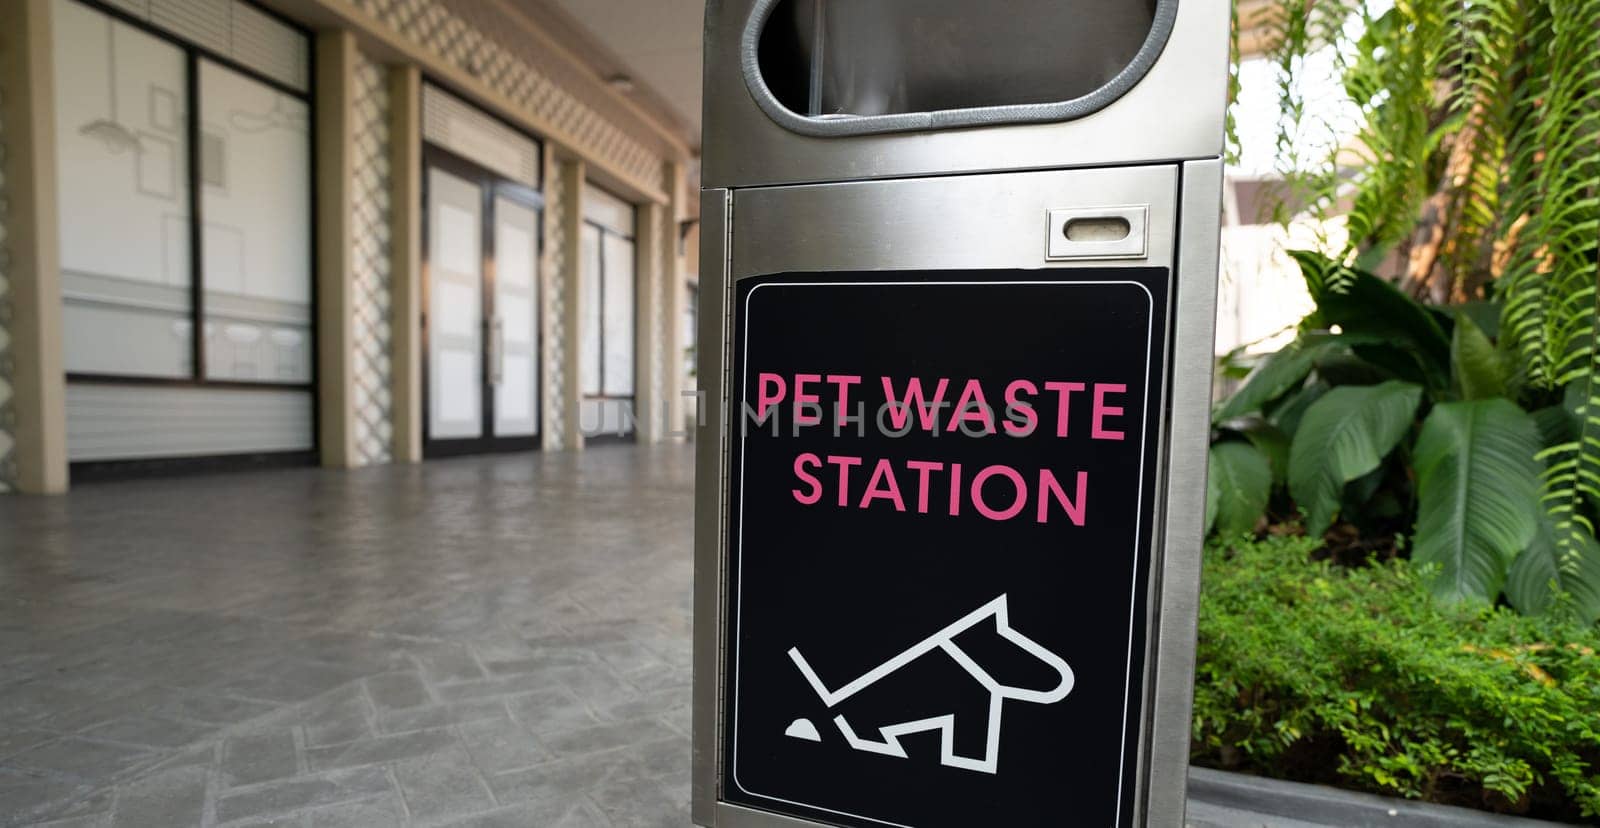 Pet waste station. Pet waste cleanup. Bin for dog owner cleanup dog excrement. Dog poop container. Hygienic pet poop solution. Outdoor public waste station. Community pet waste station. by Fahroni